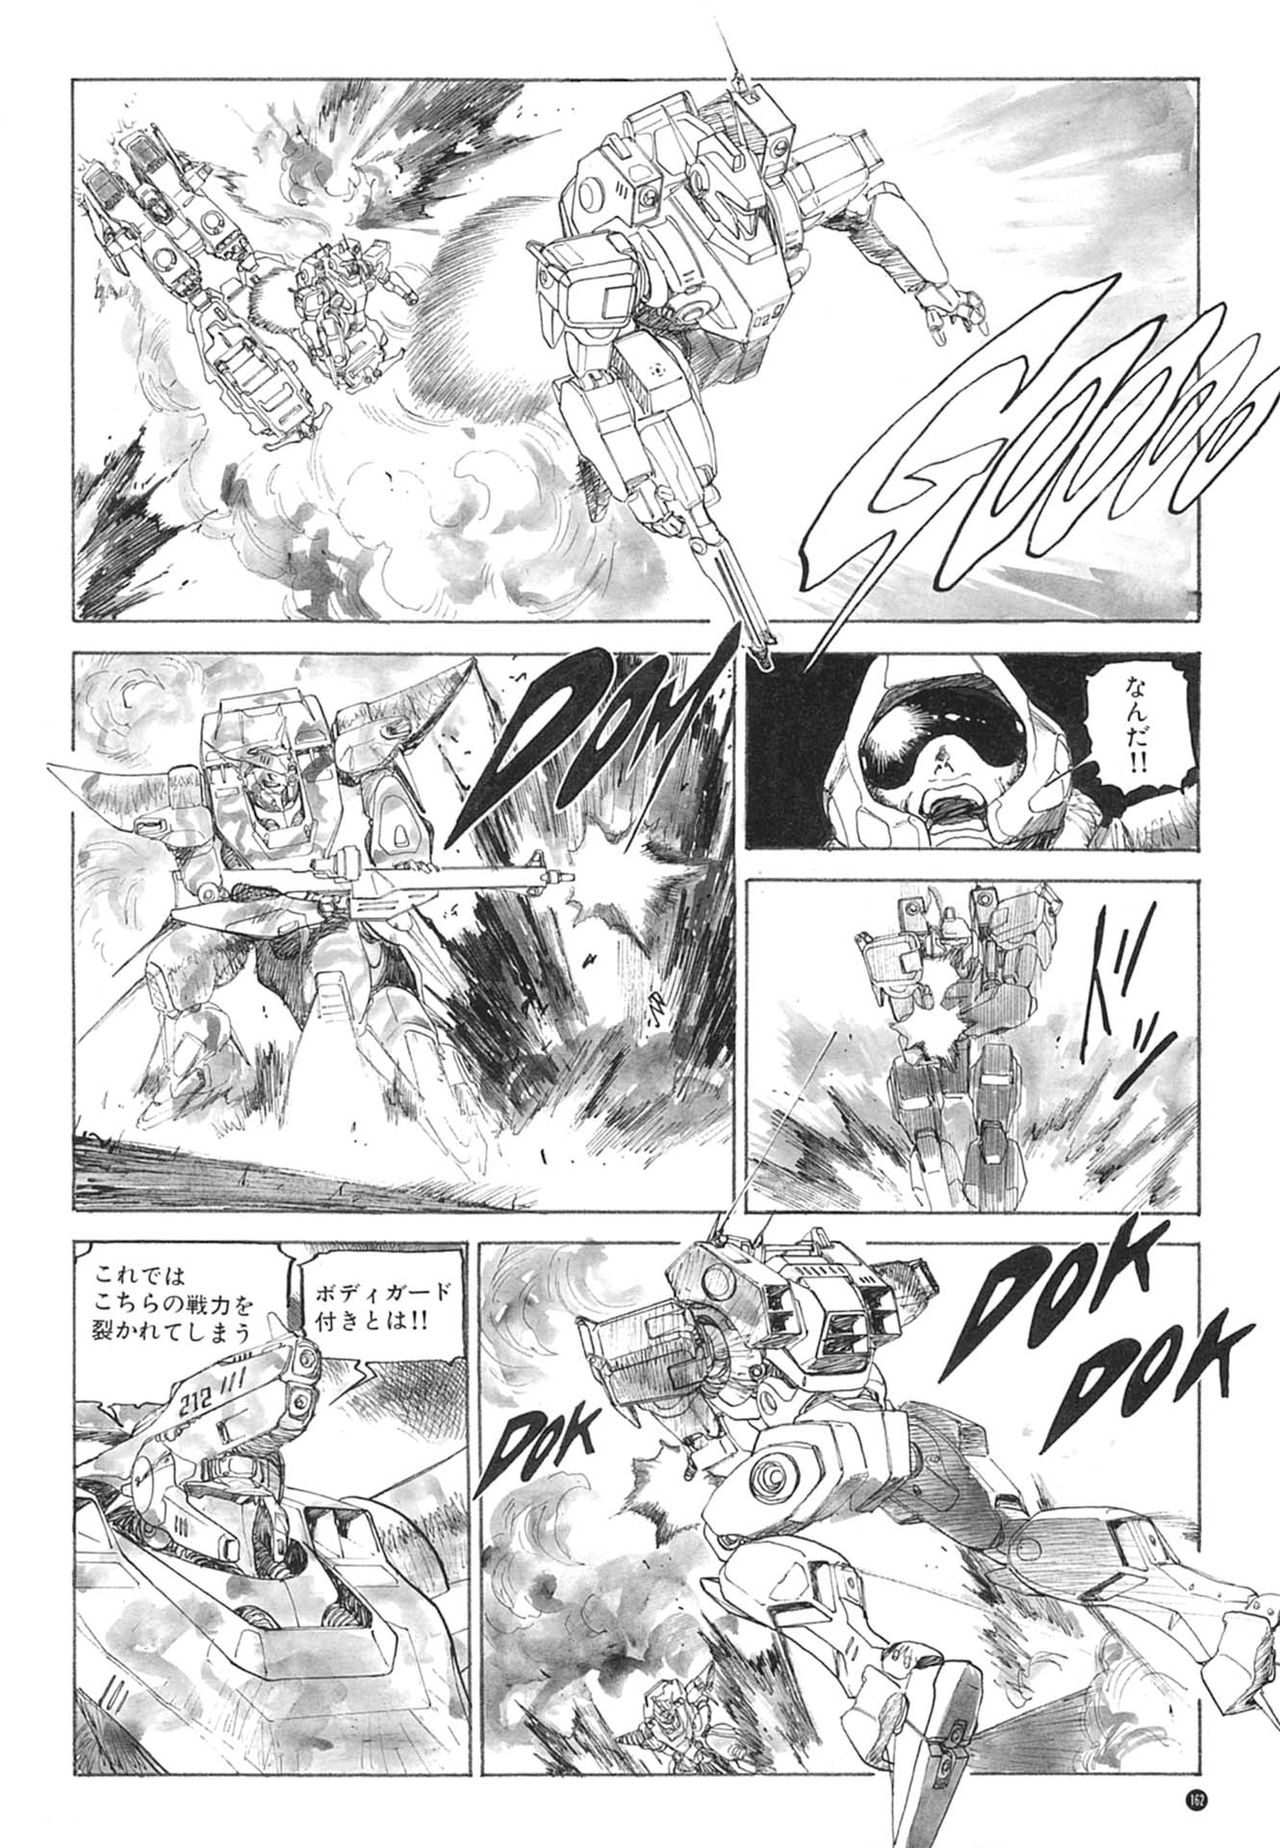 [Kazuhisa Kondo] Kazuhisa Kondo 2D & 3D Works - Go Ahead - From Mobile Suit Gundam to Original Mechanism 161